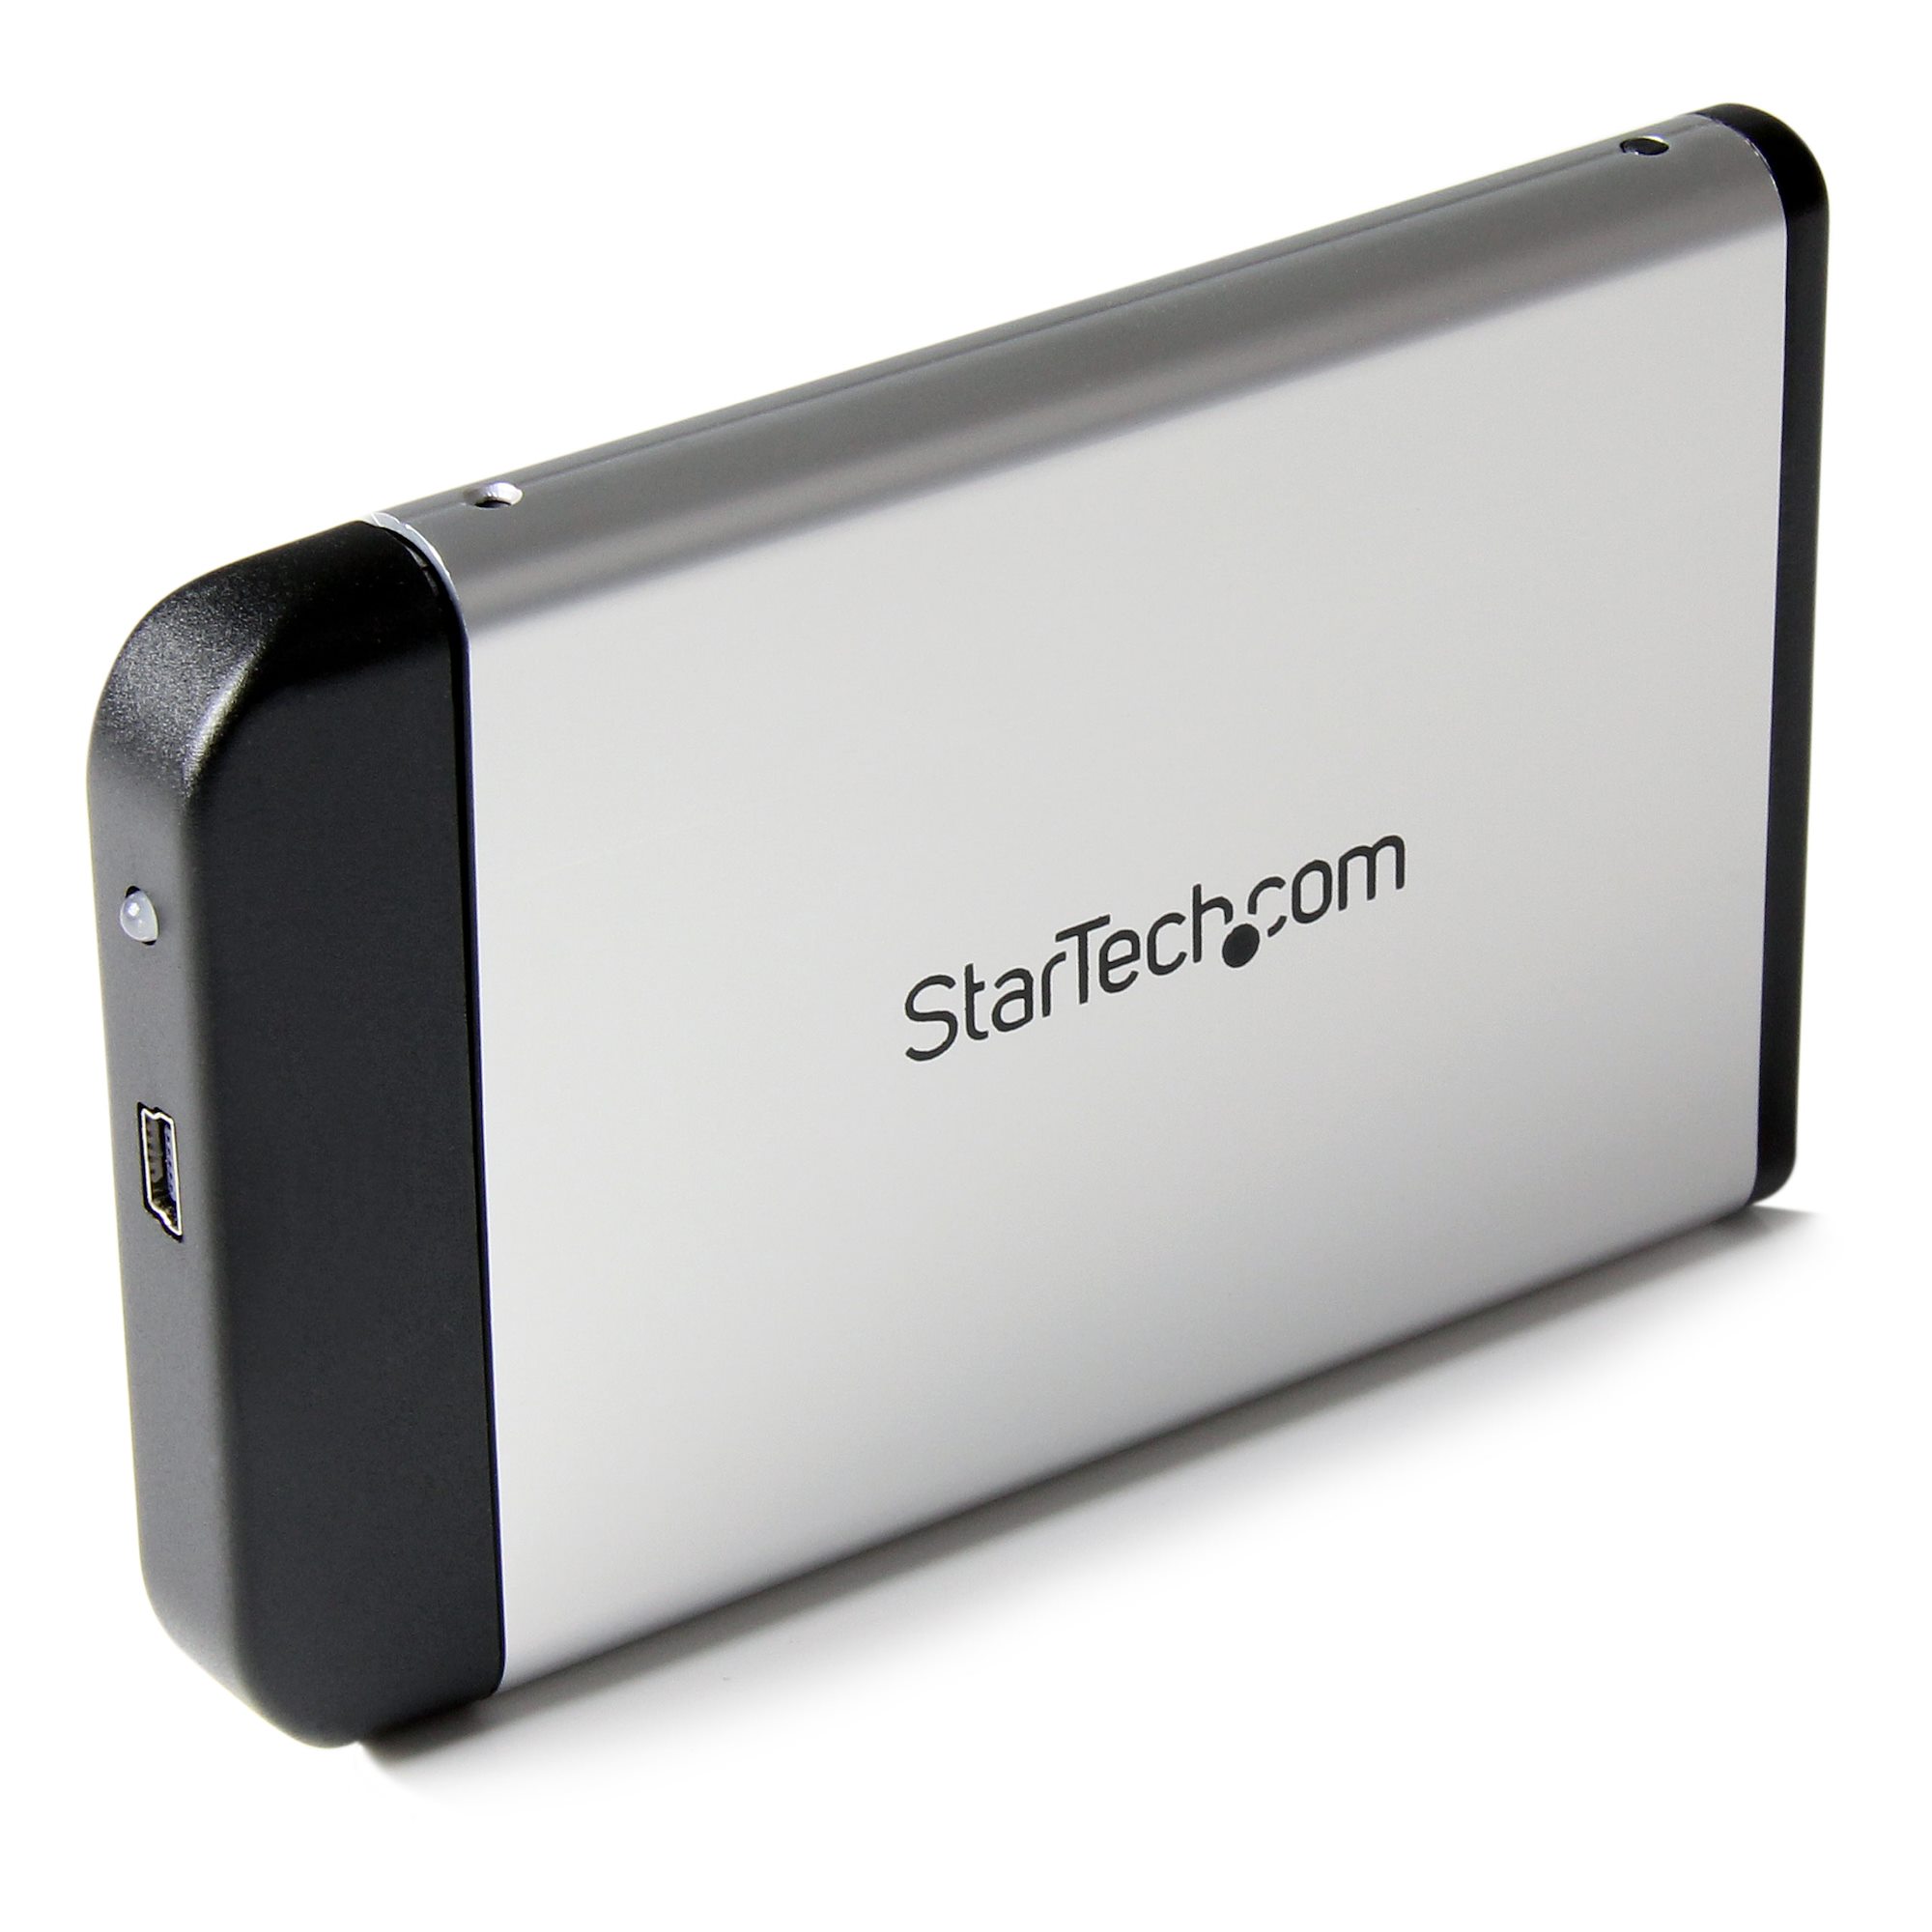 New 160gb external Portable 2.5" USB 3.0 hard Drive HDD POCKET SIZE black 